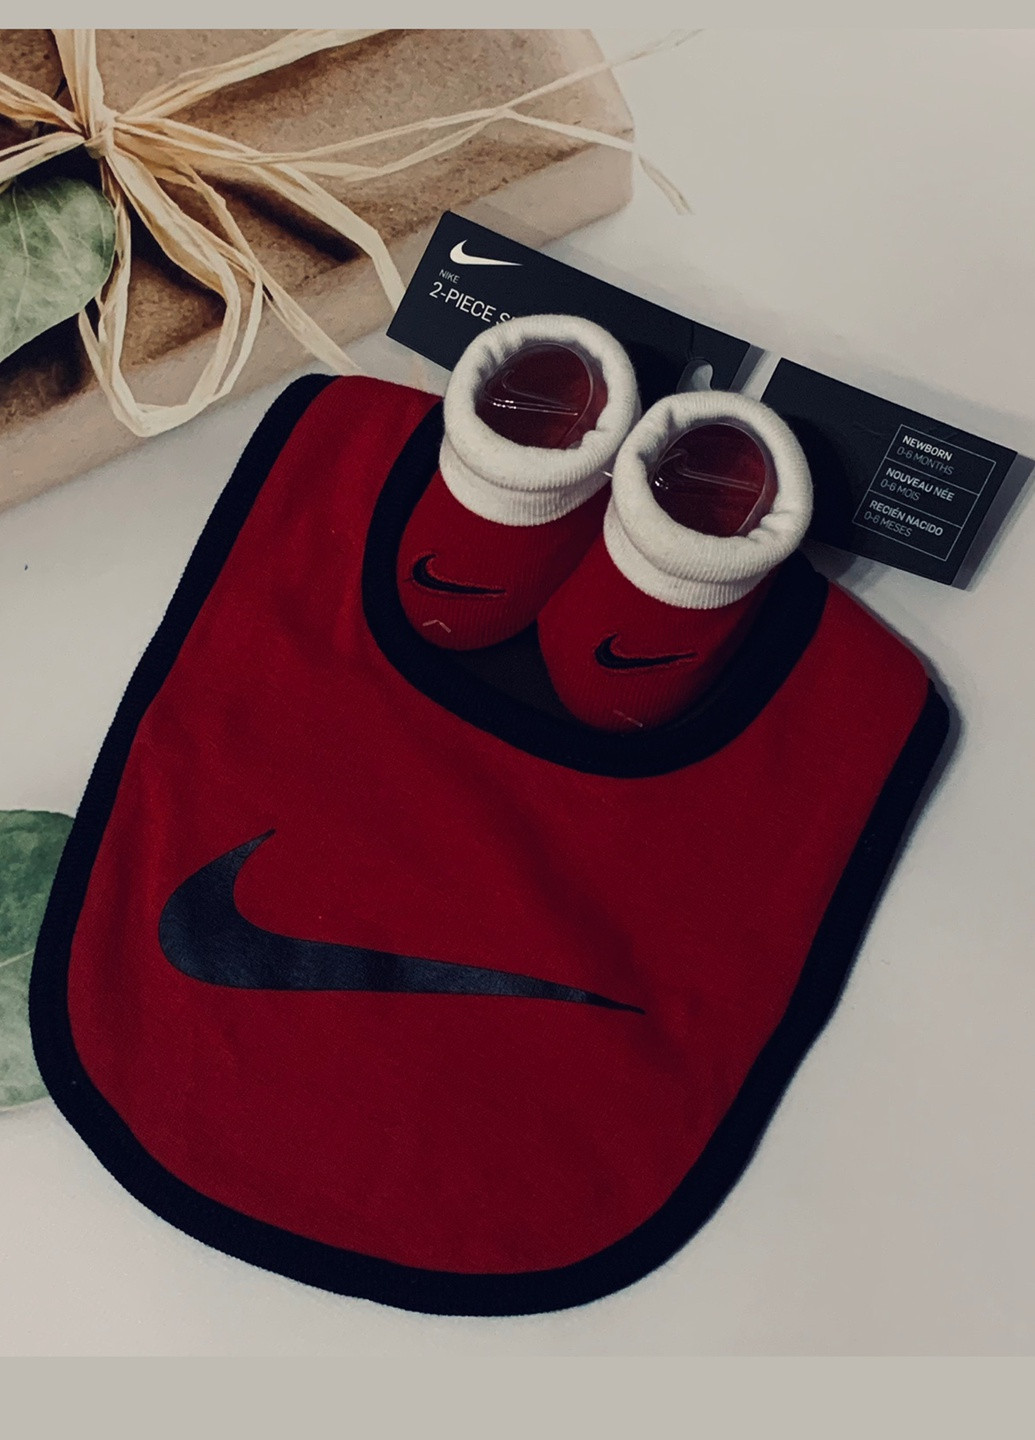 Слюнявчик и пинетки Nike (256537359)